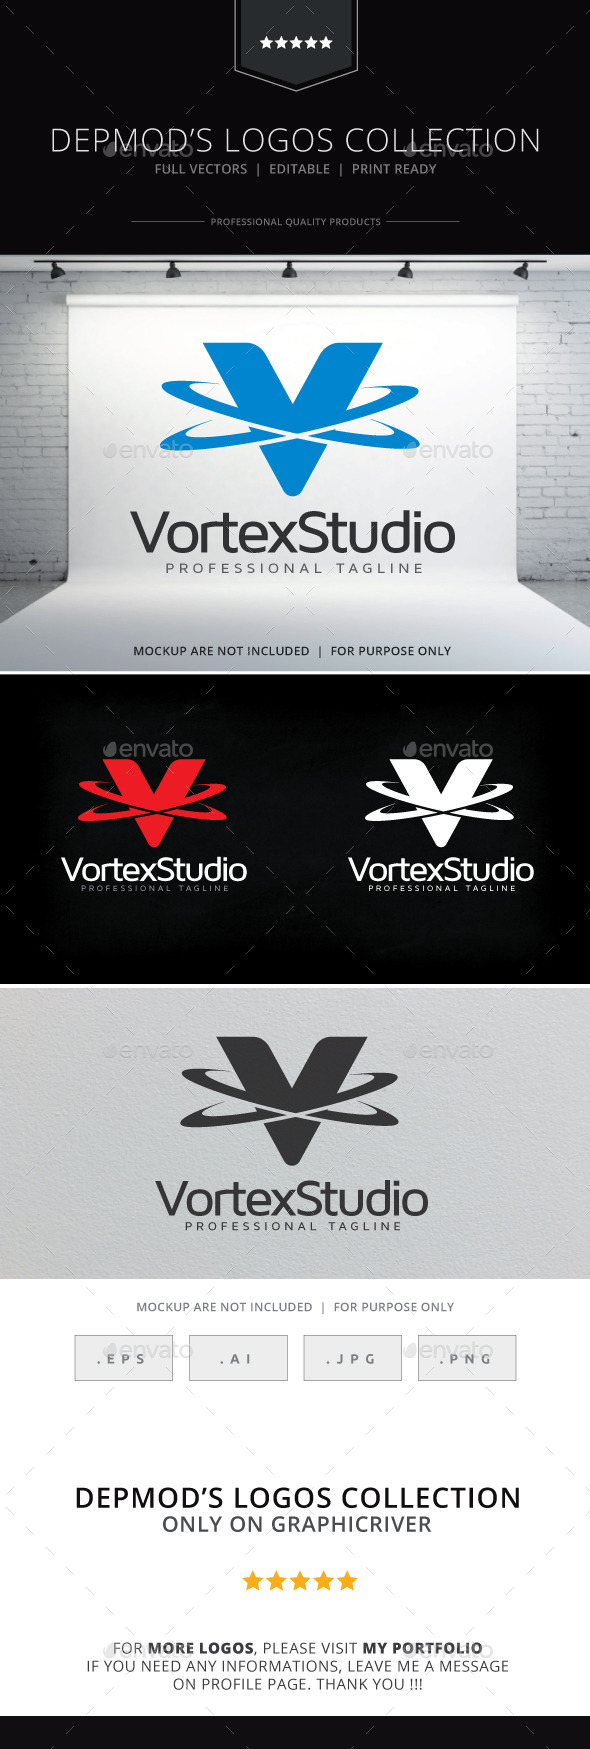 Vortex Studio Logo